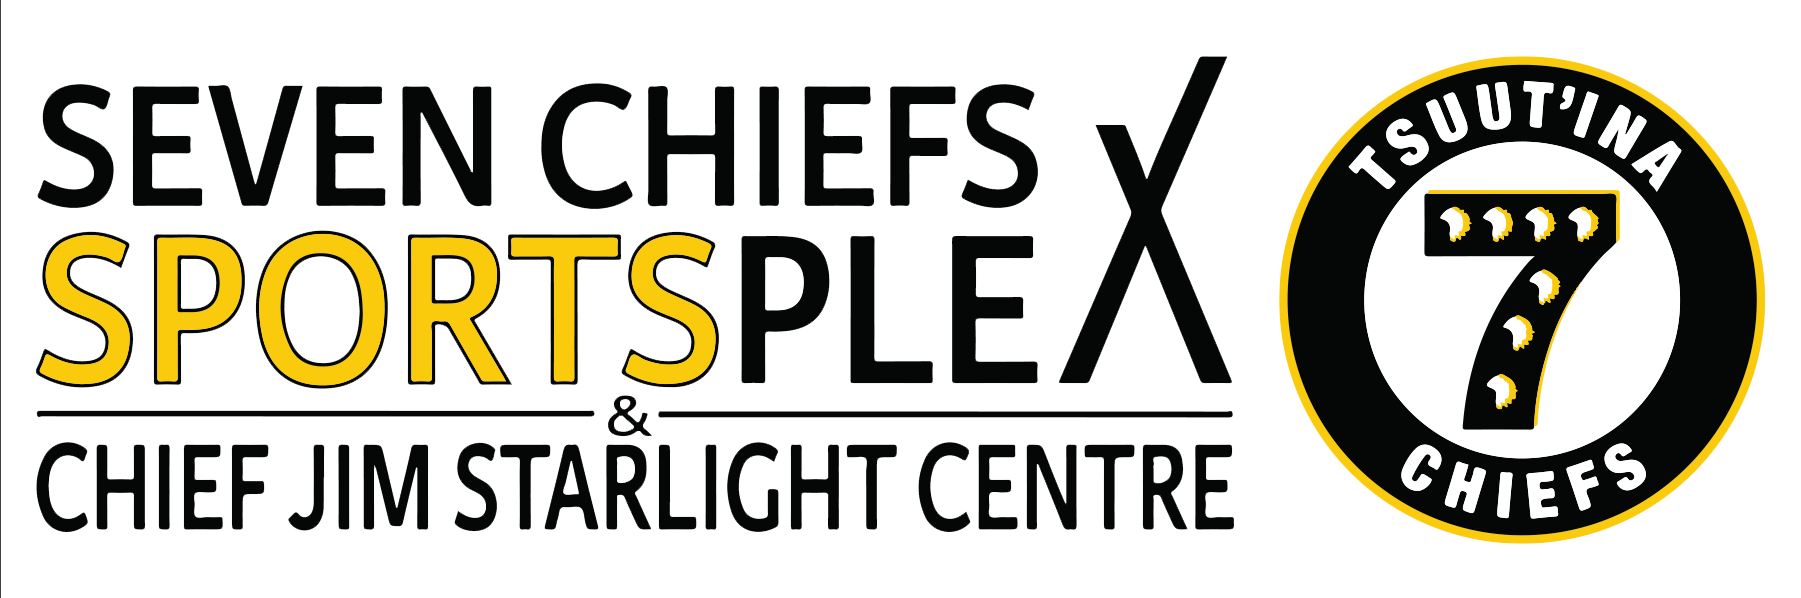 Seven Chiefs Sports Plex